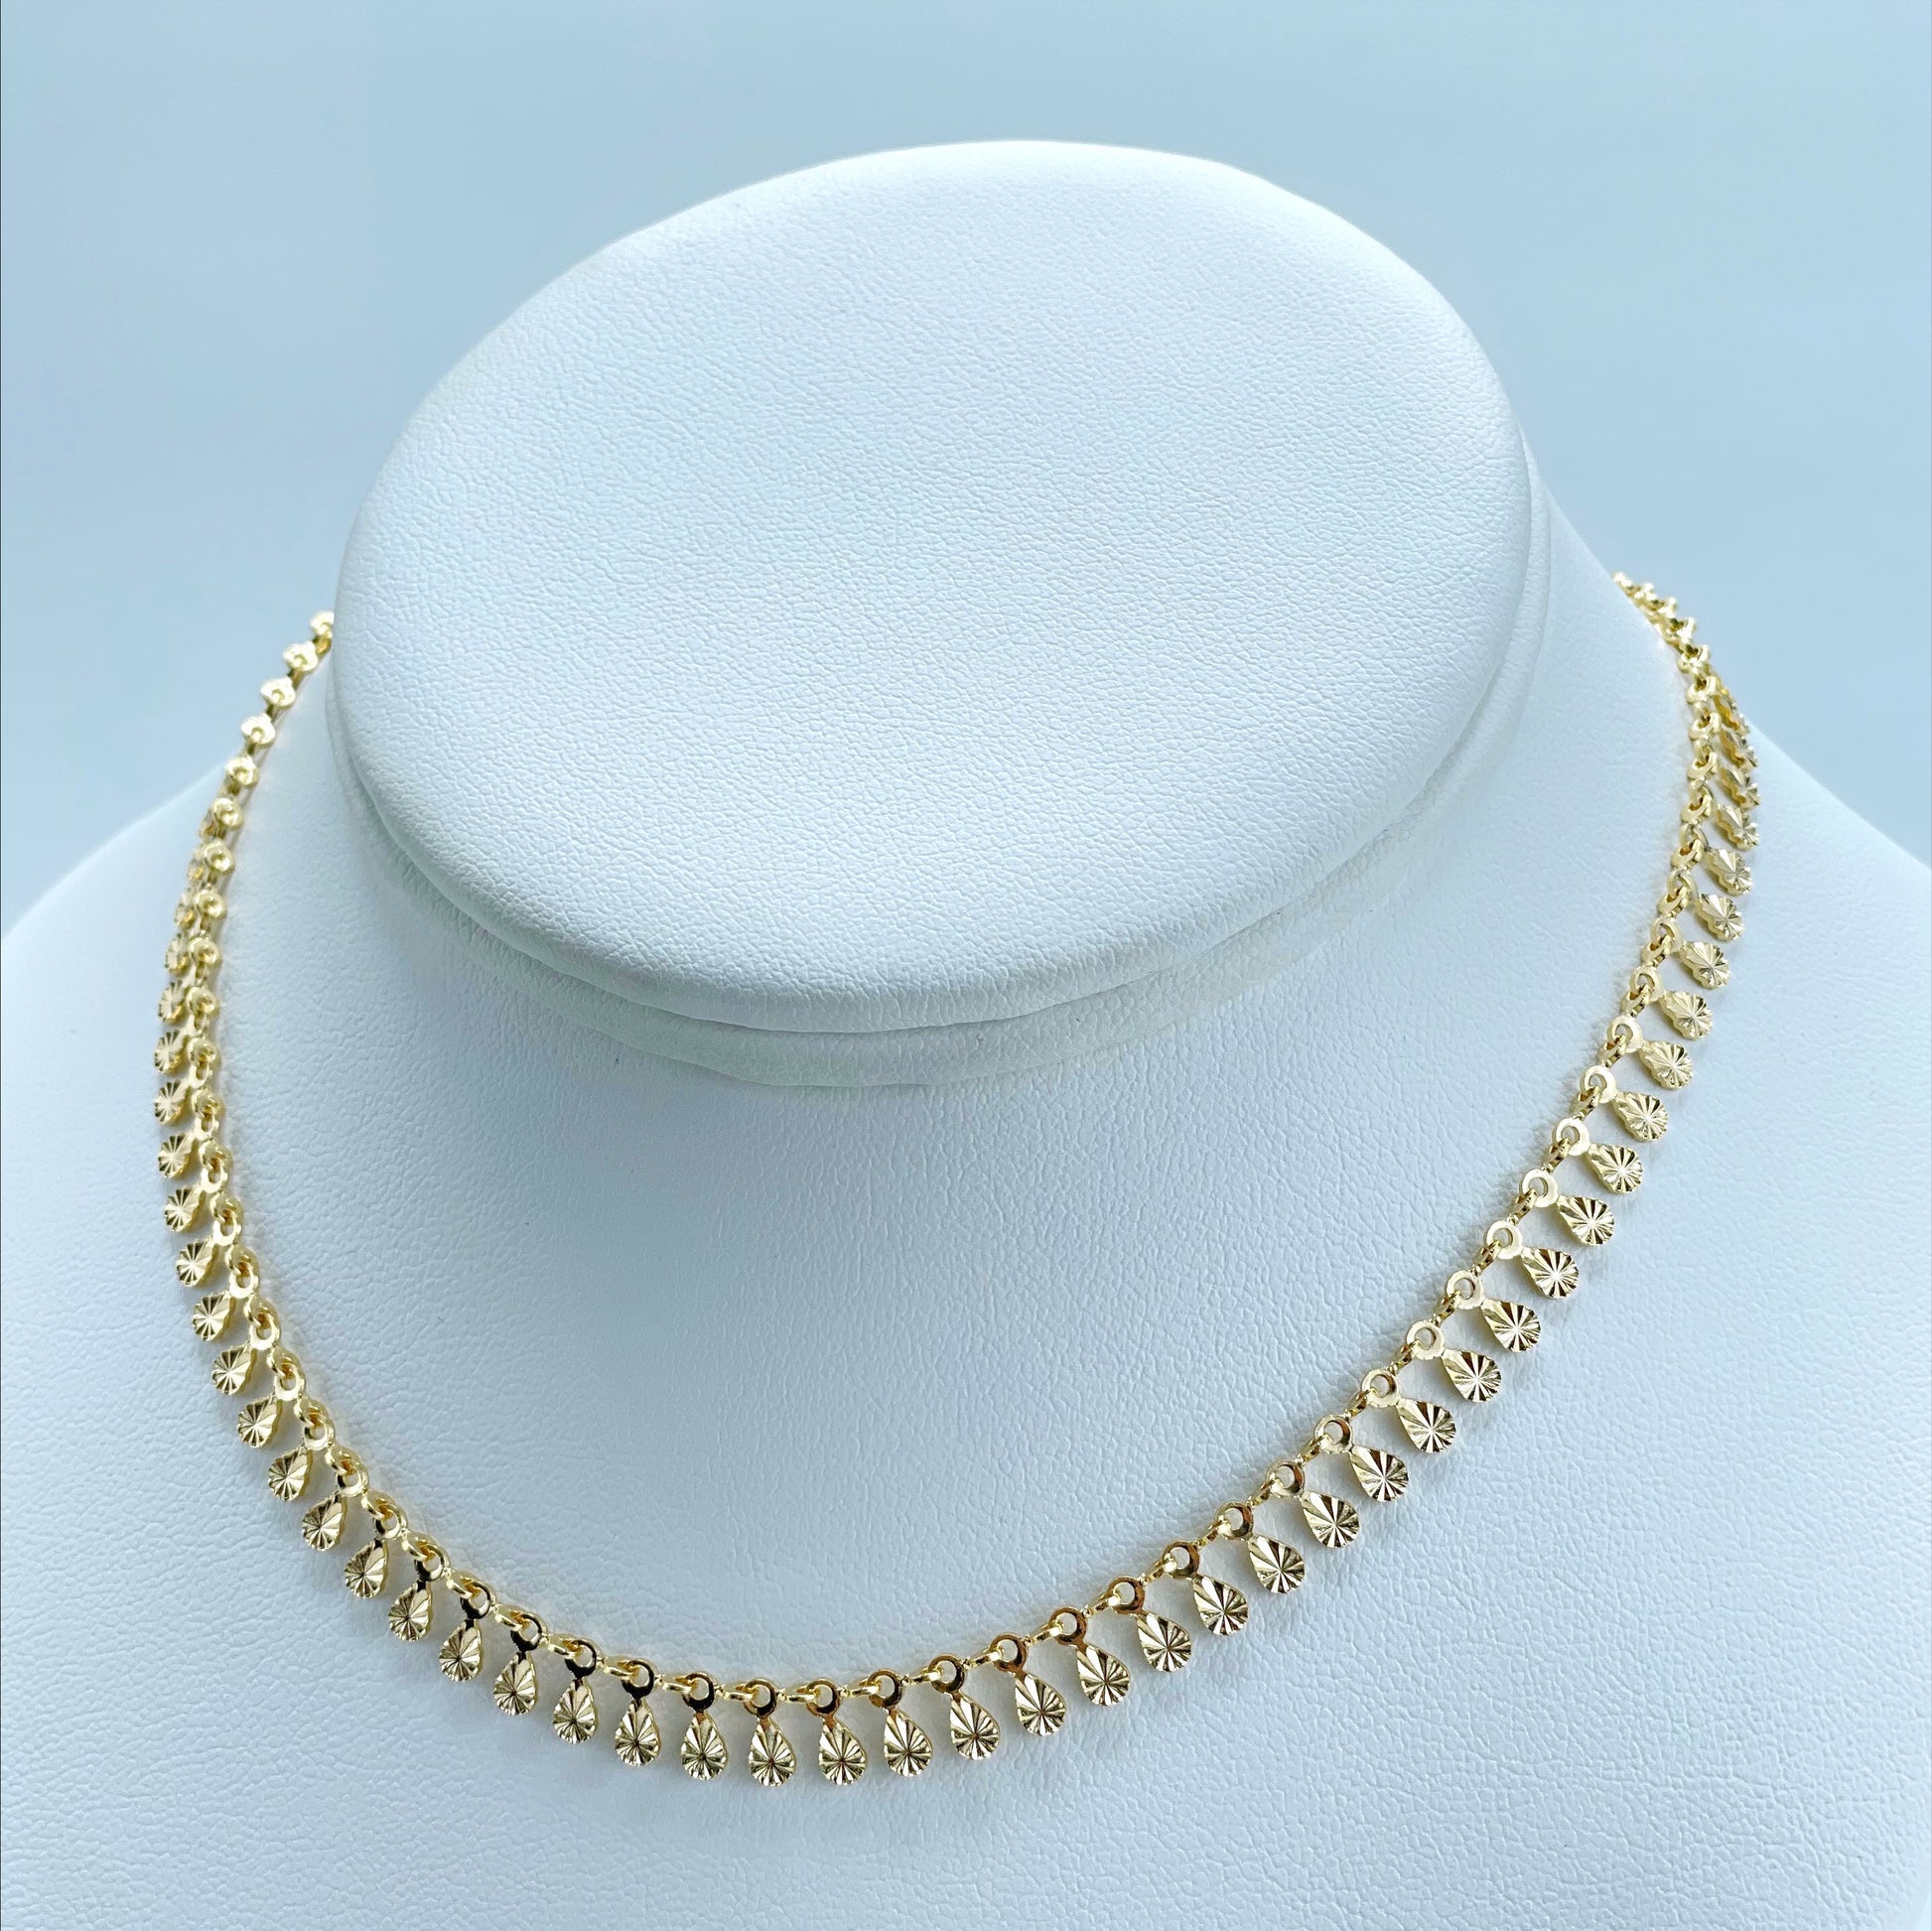 18k Gold Filled 7mm Teardrop Choker, Necklace Wholesale Jewelry Supplies